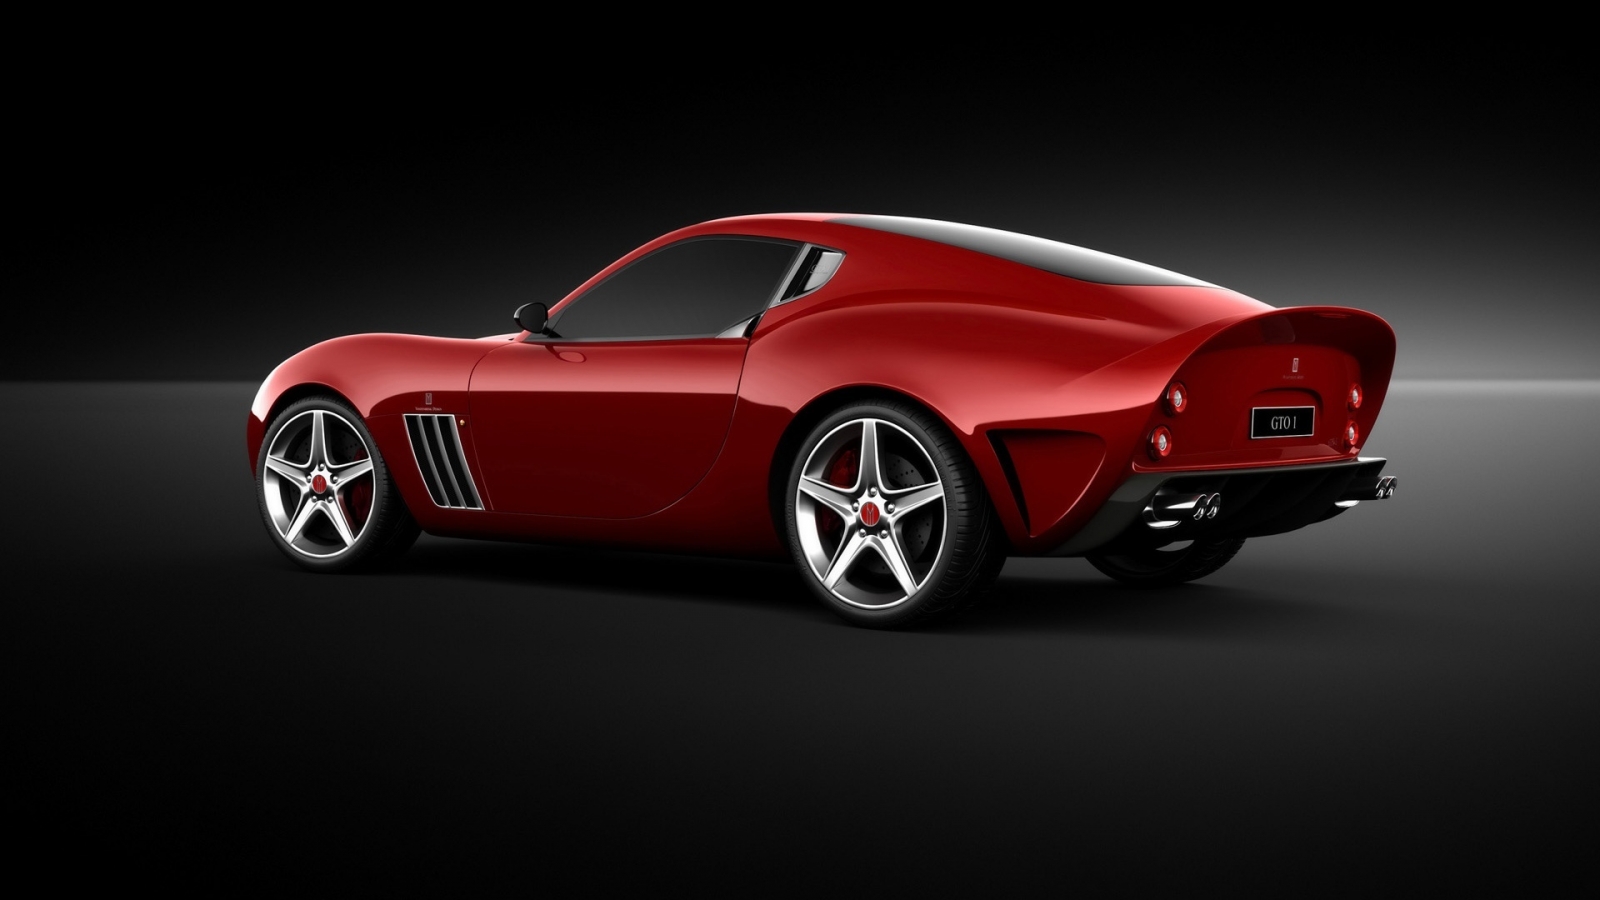 Ferrari Vandenbrink 599 GTO 2009 for 1600 x 900 HDTV resolution